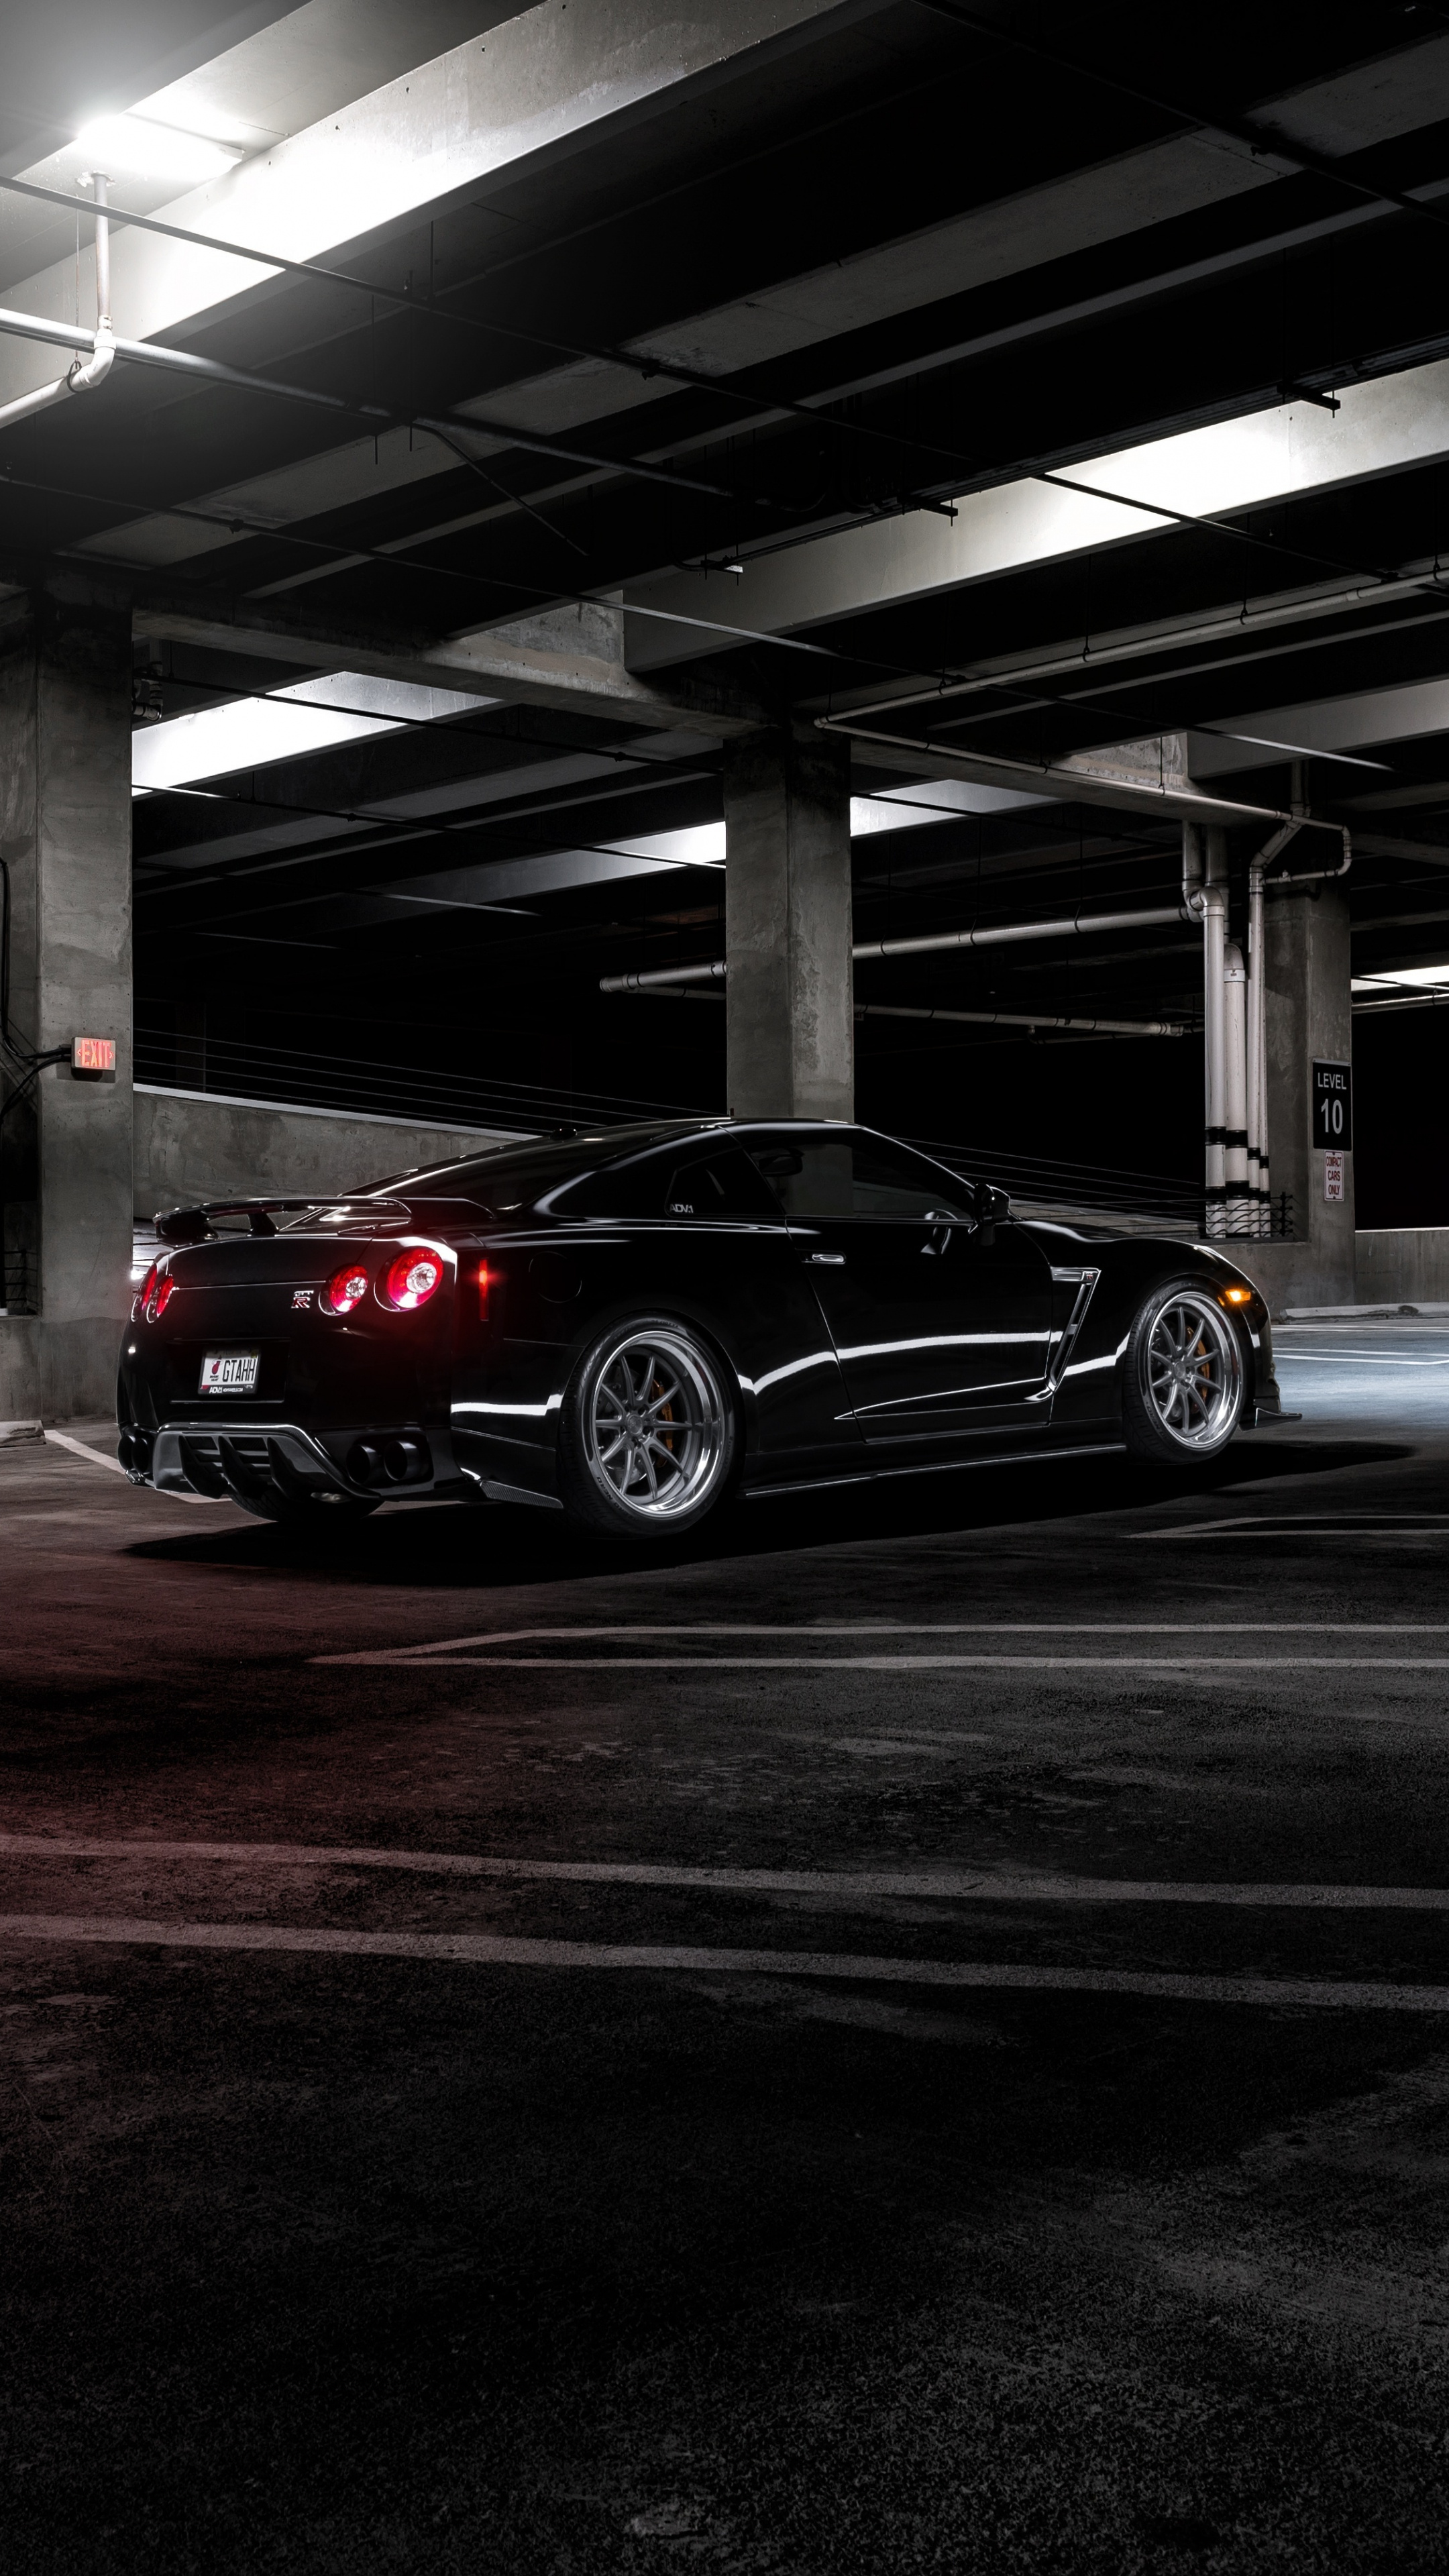 GT-R, Download black car Nissan GT-R wallpaper, Xperia Z5 Premium, 4K image, 2160x3840 4K Handy